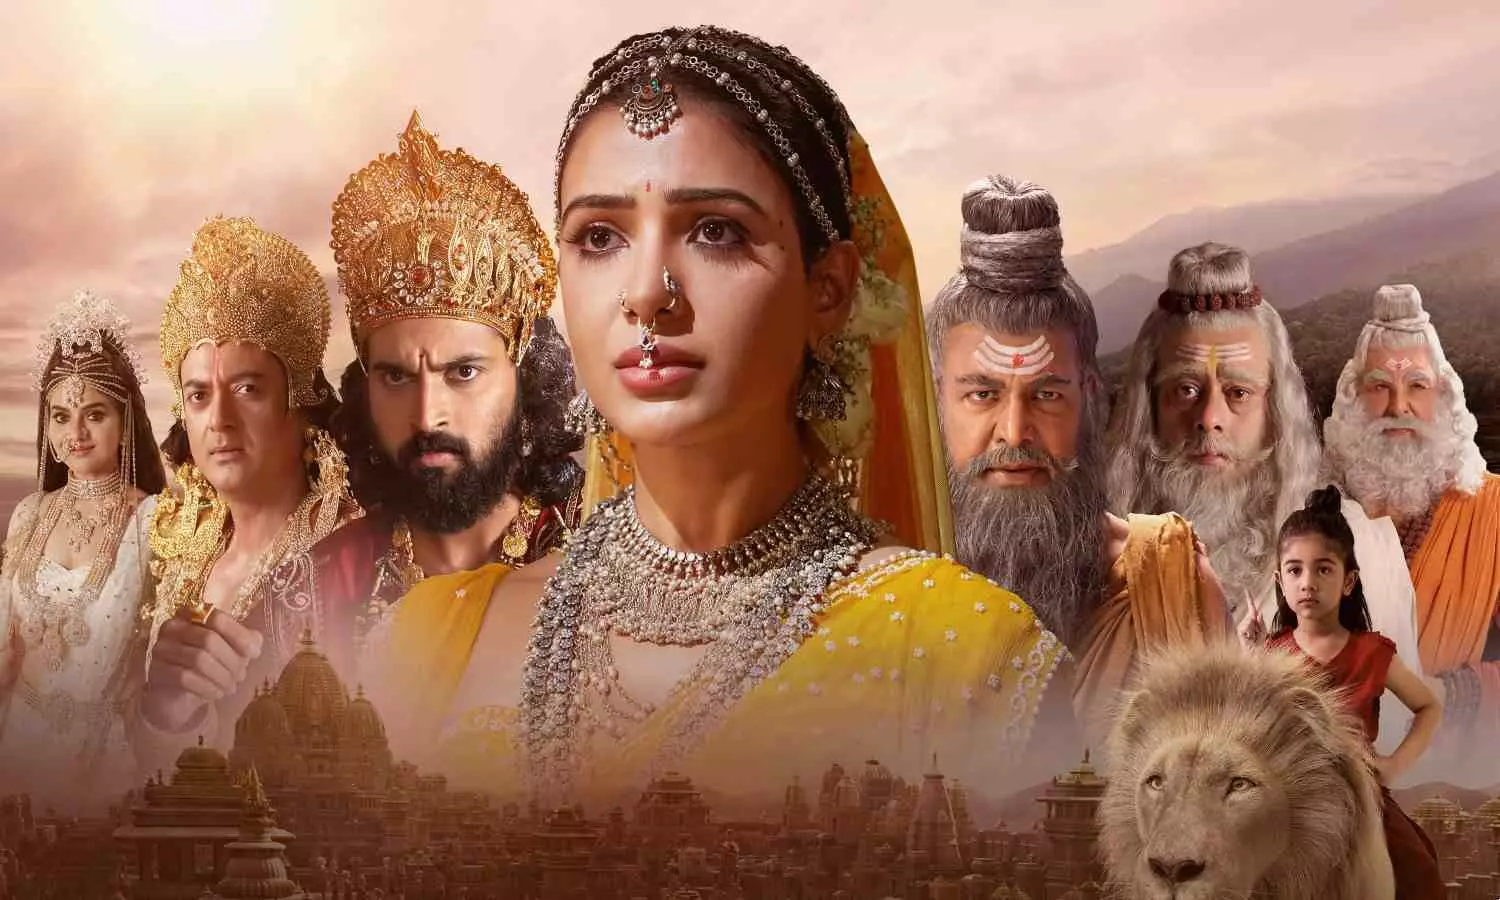 Shaakuntalam Movie Review: శాకుంతలం మూవీ రివ్యూ